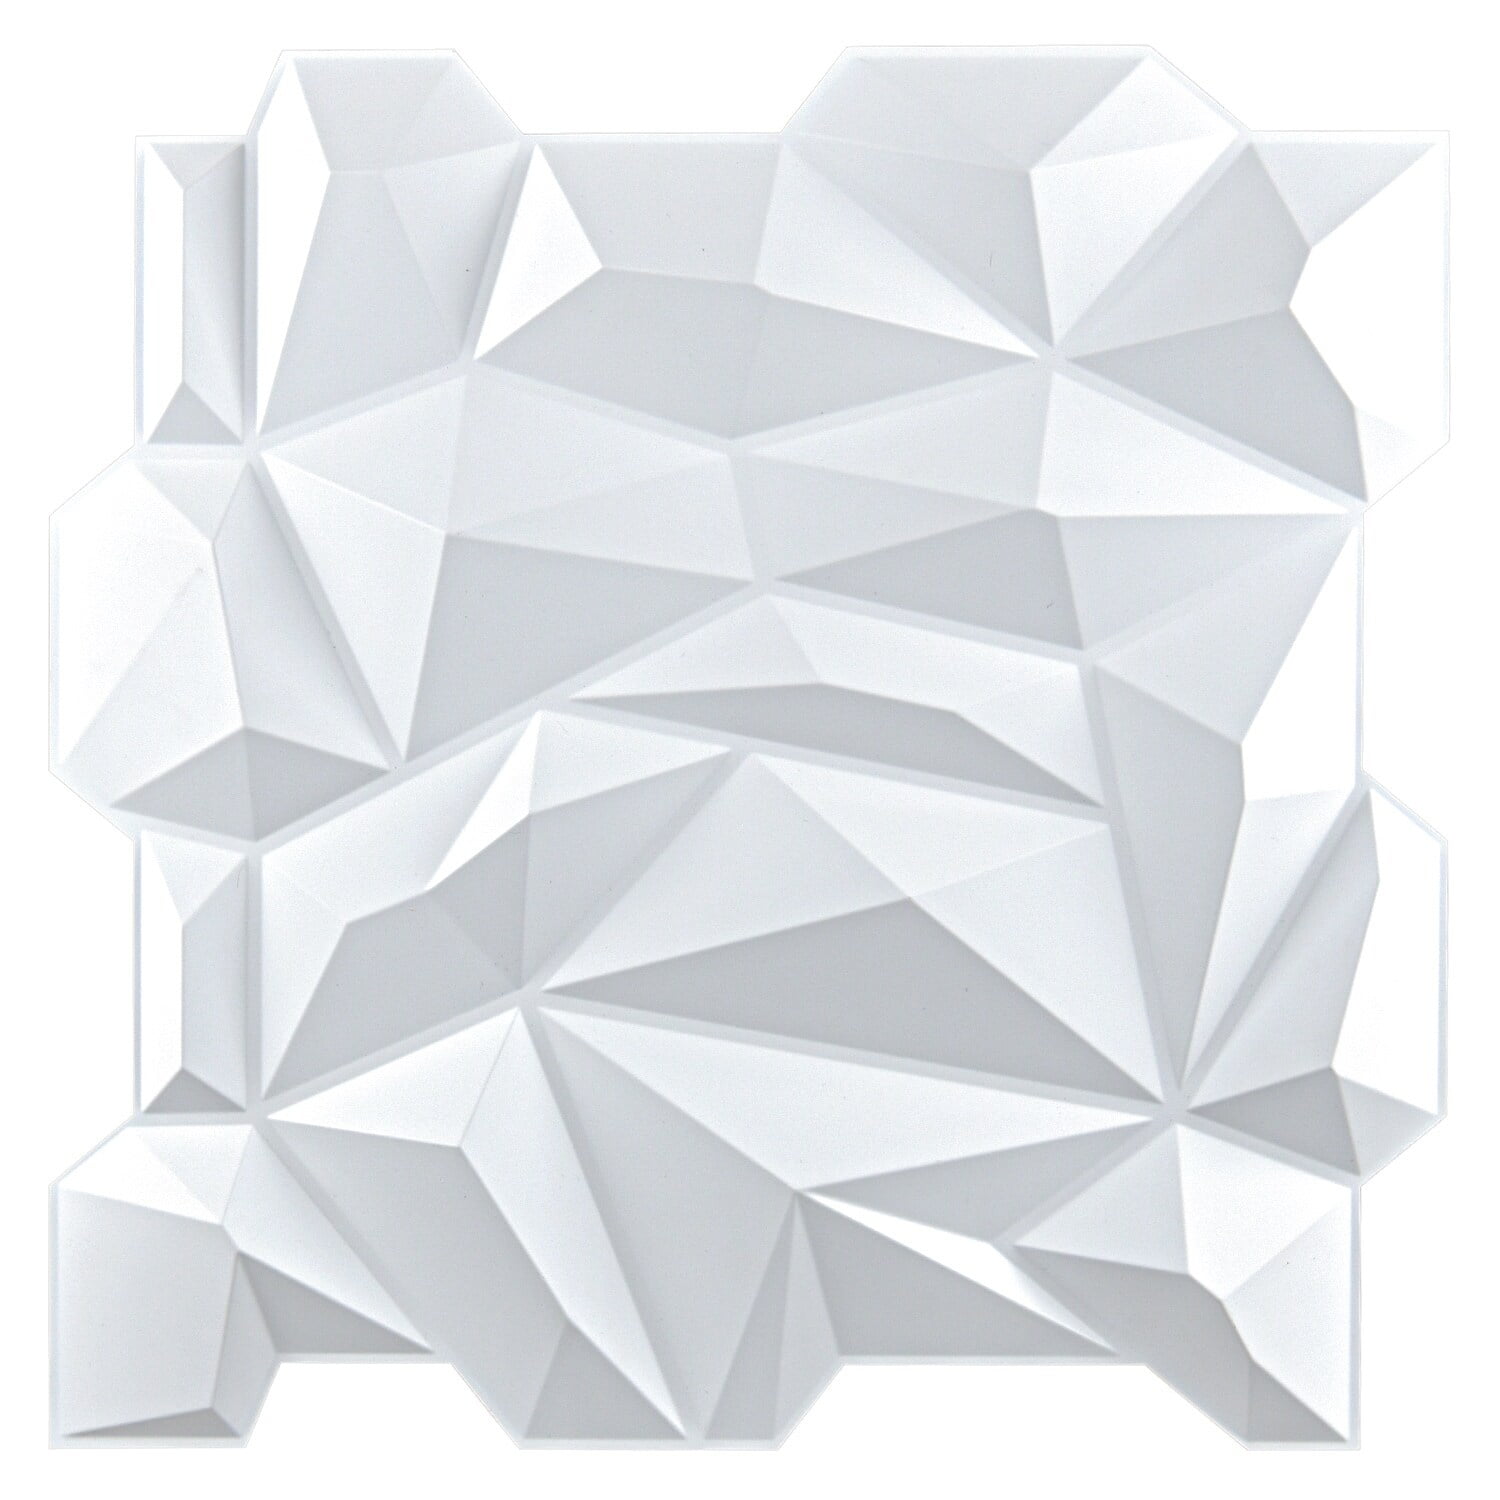 Art3d Decorative 3D Wall Panels in Diamond Design, India